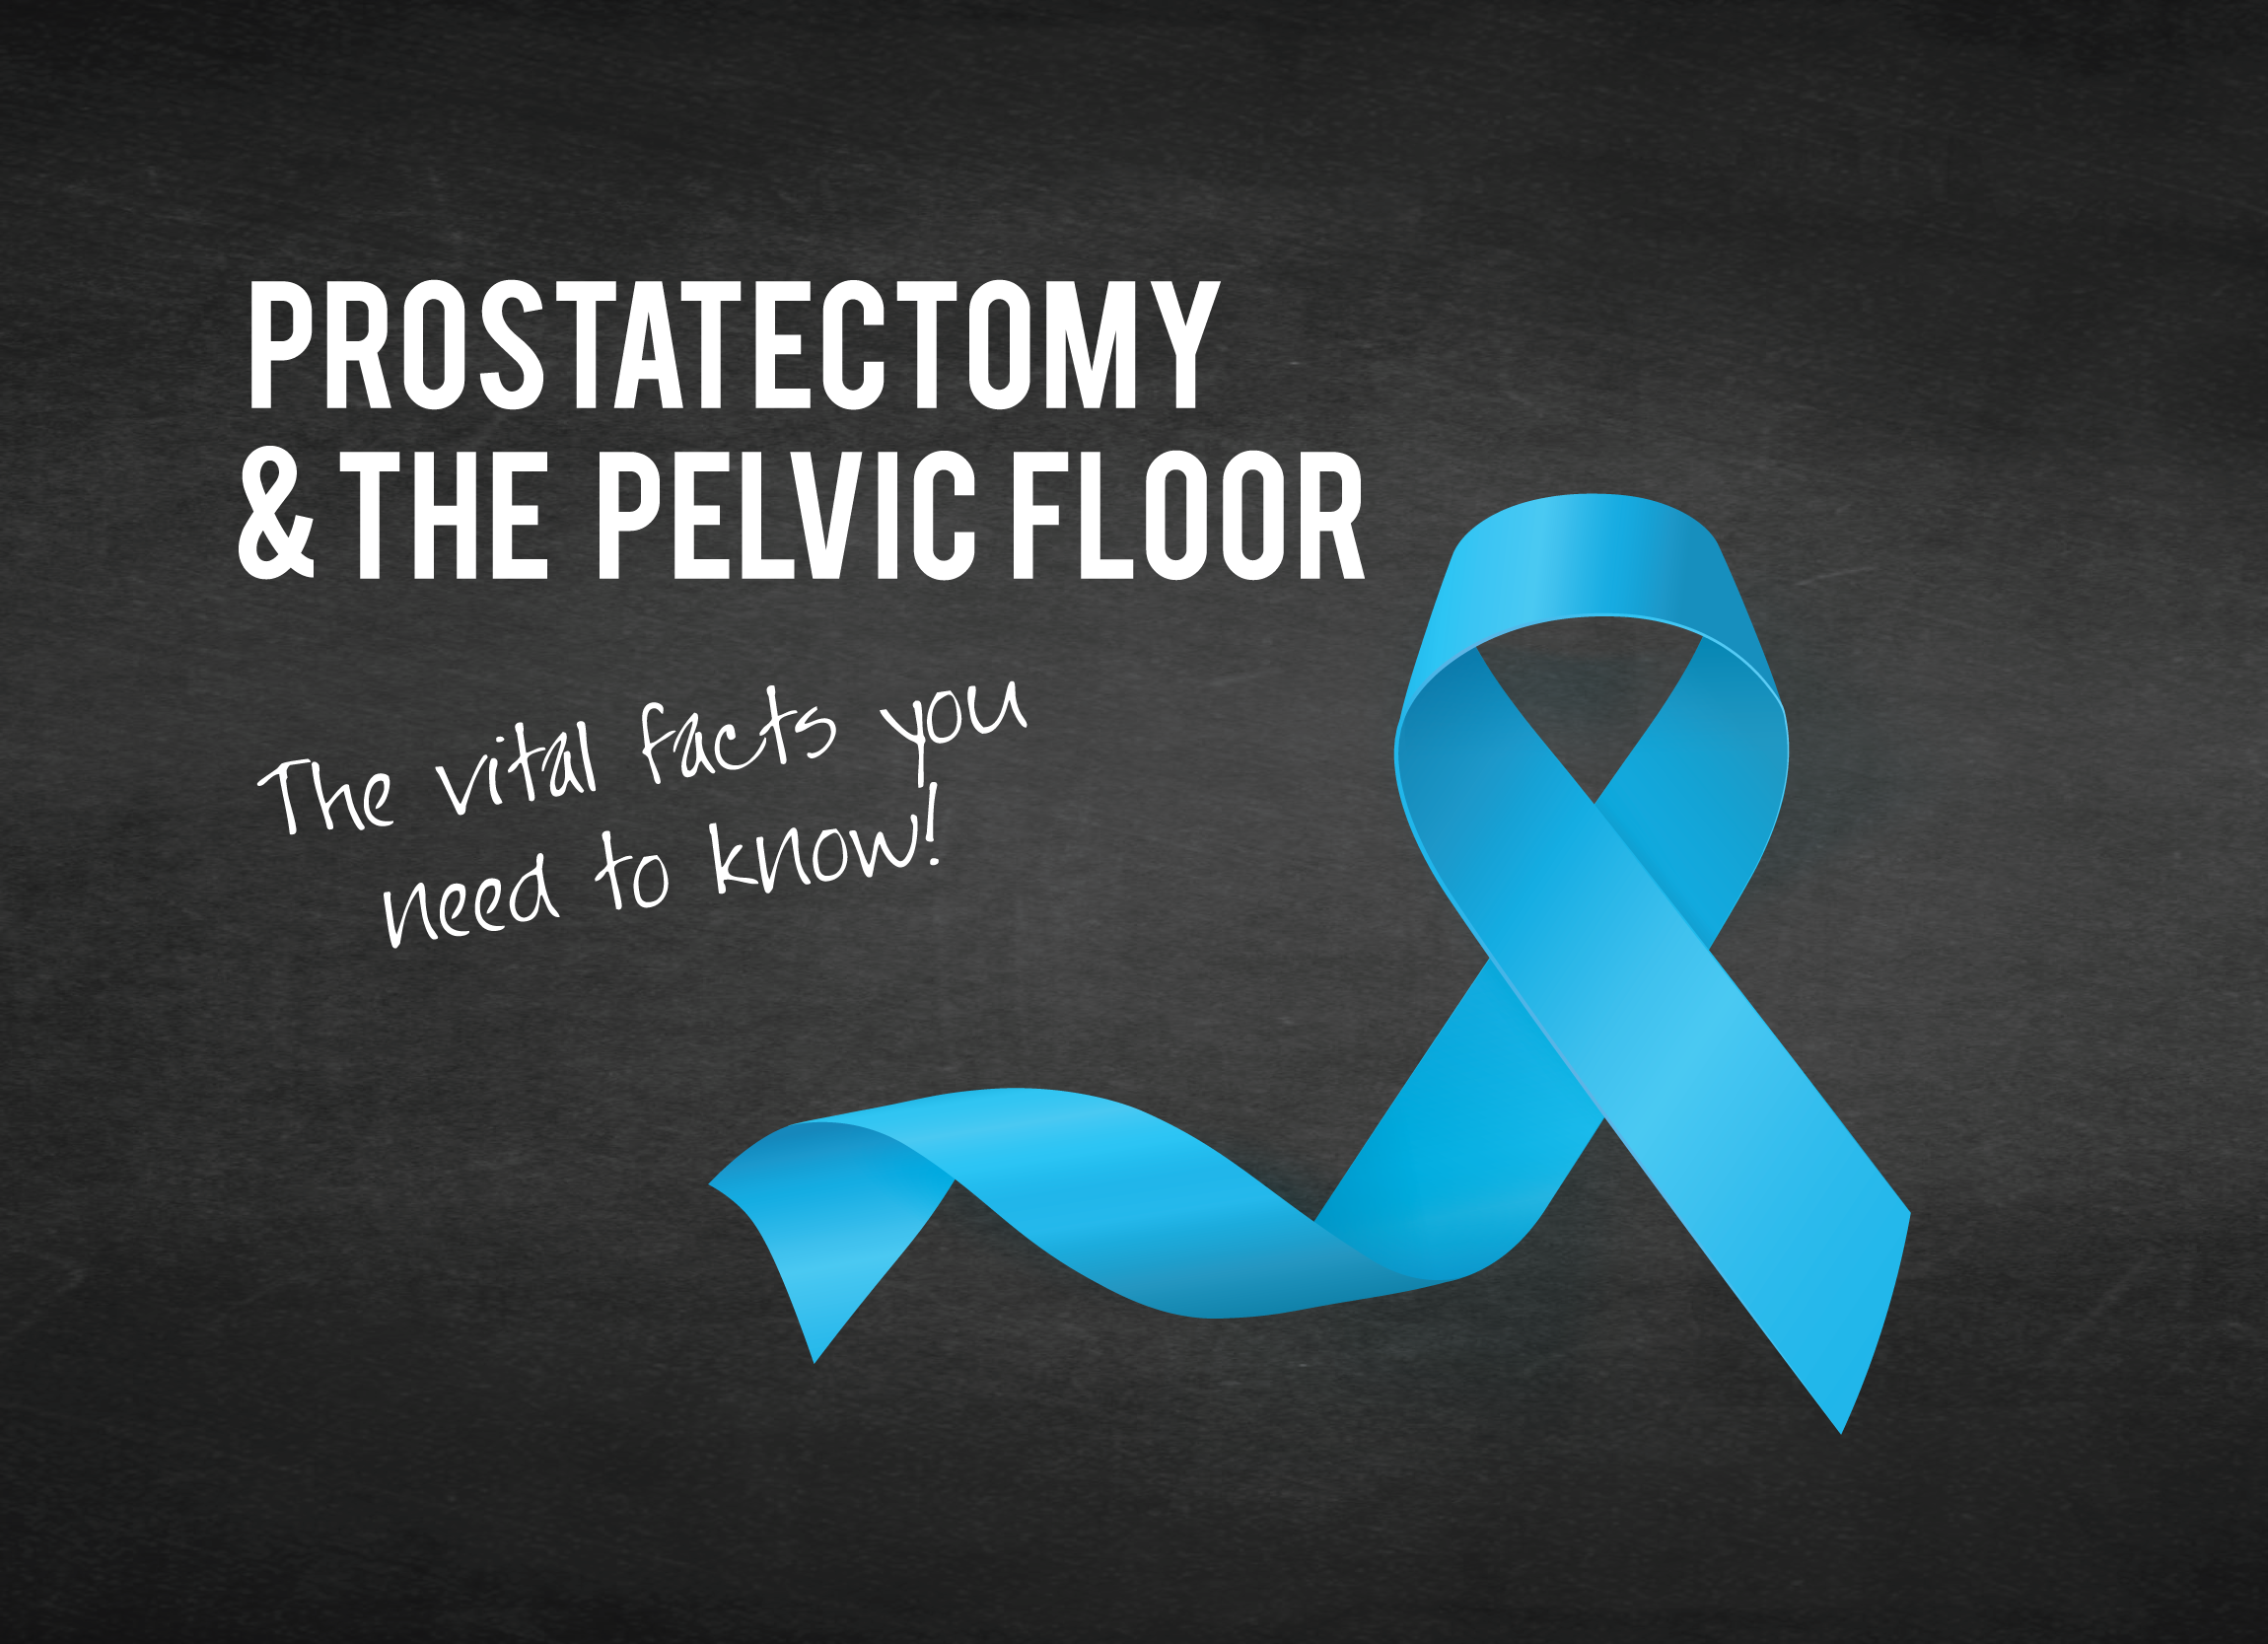 Blog 11 - Prostatectomy & The Pelvic Floor